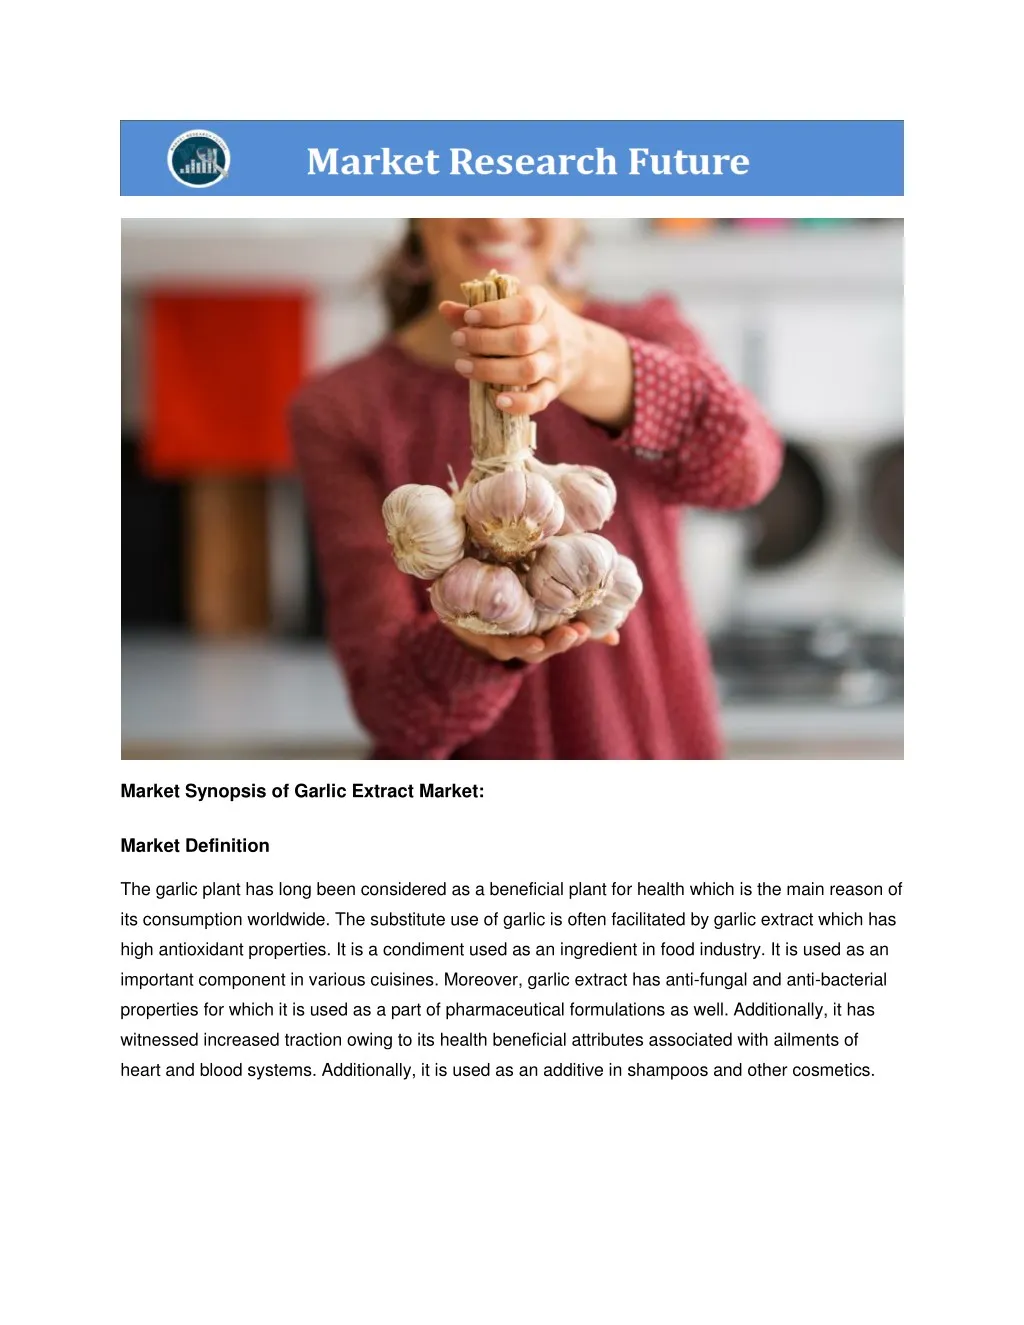 market synopsis of garlic extract market